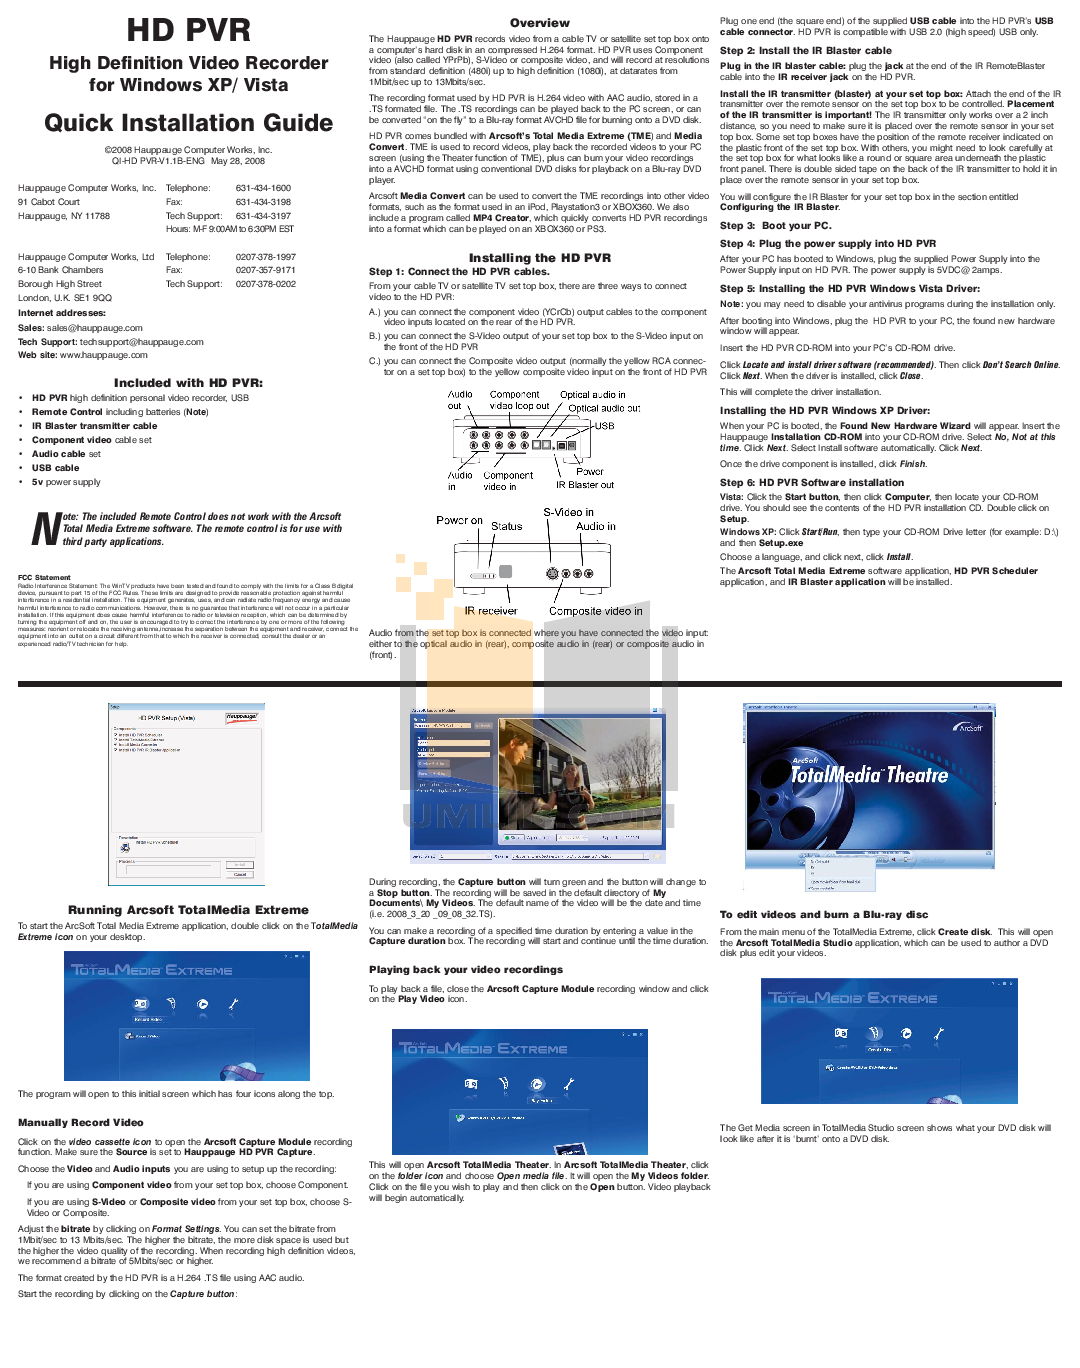 pdf for Hauppauge DVR 1212 manual